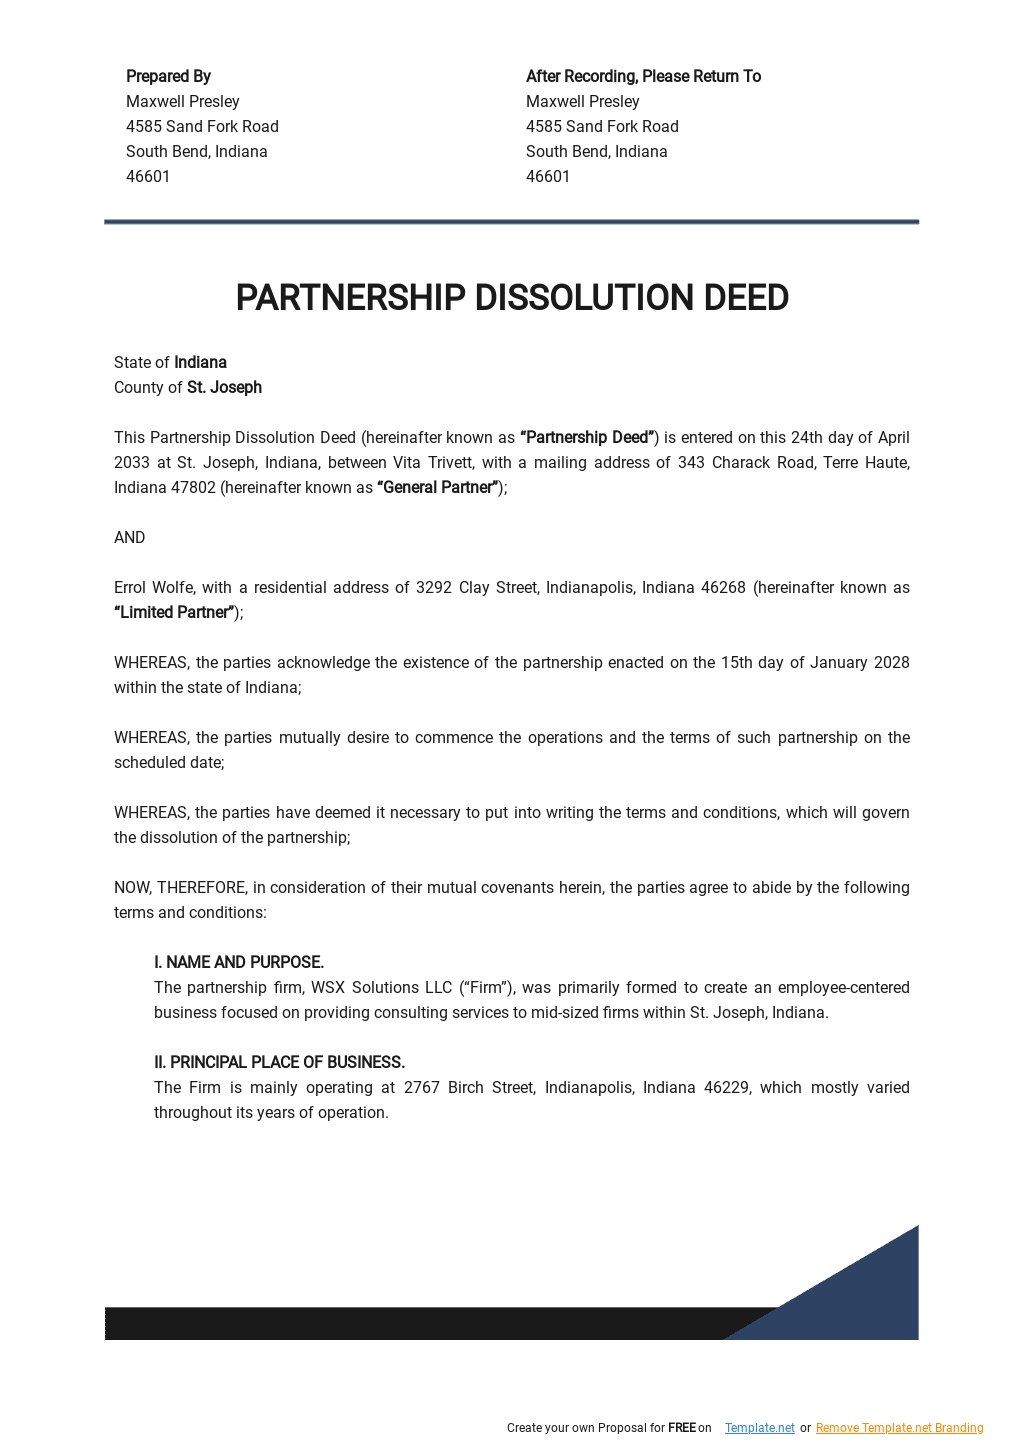 Partnership Dissolution Deed Template